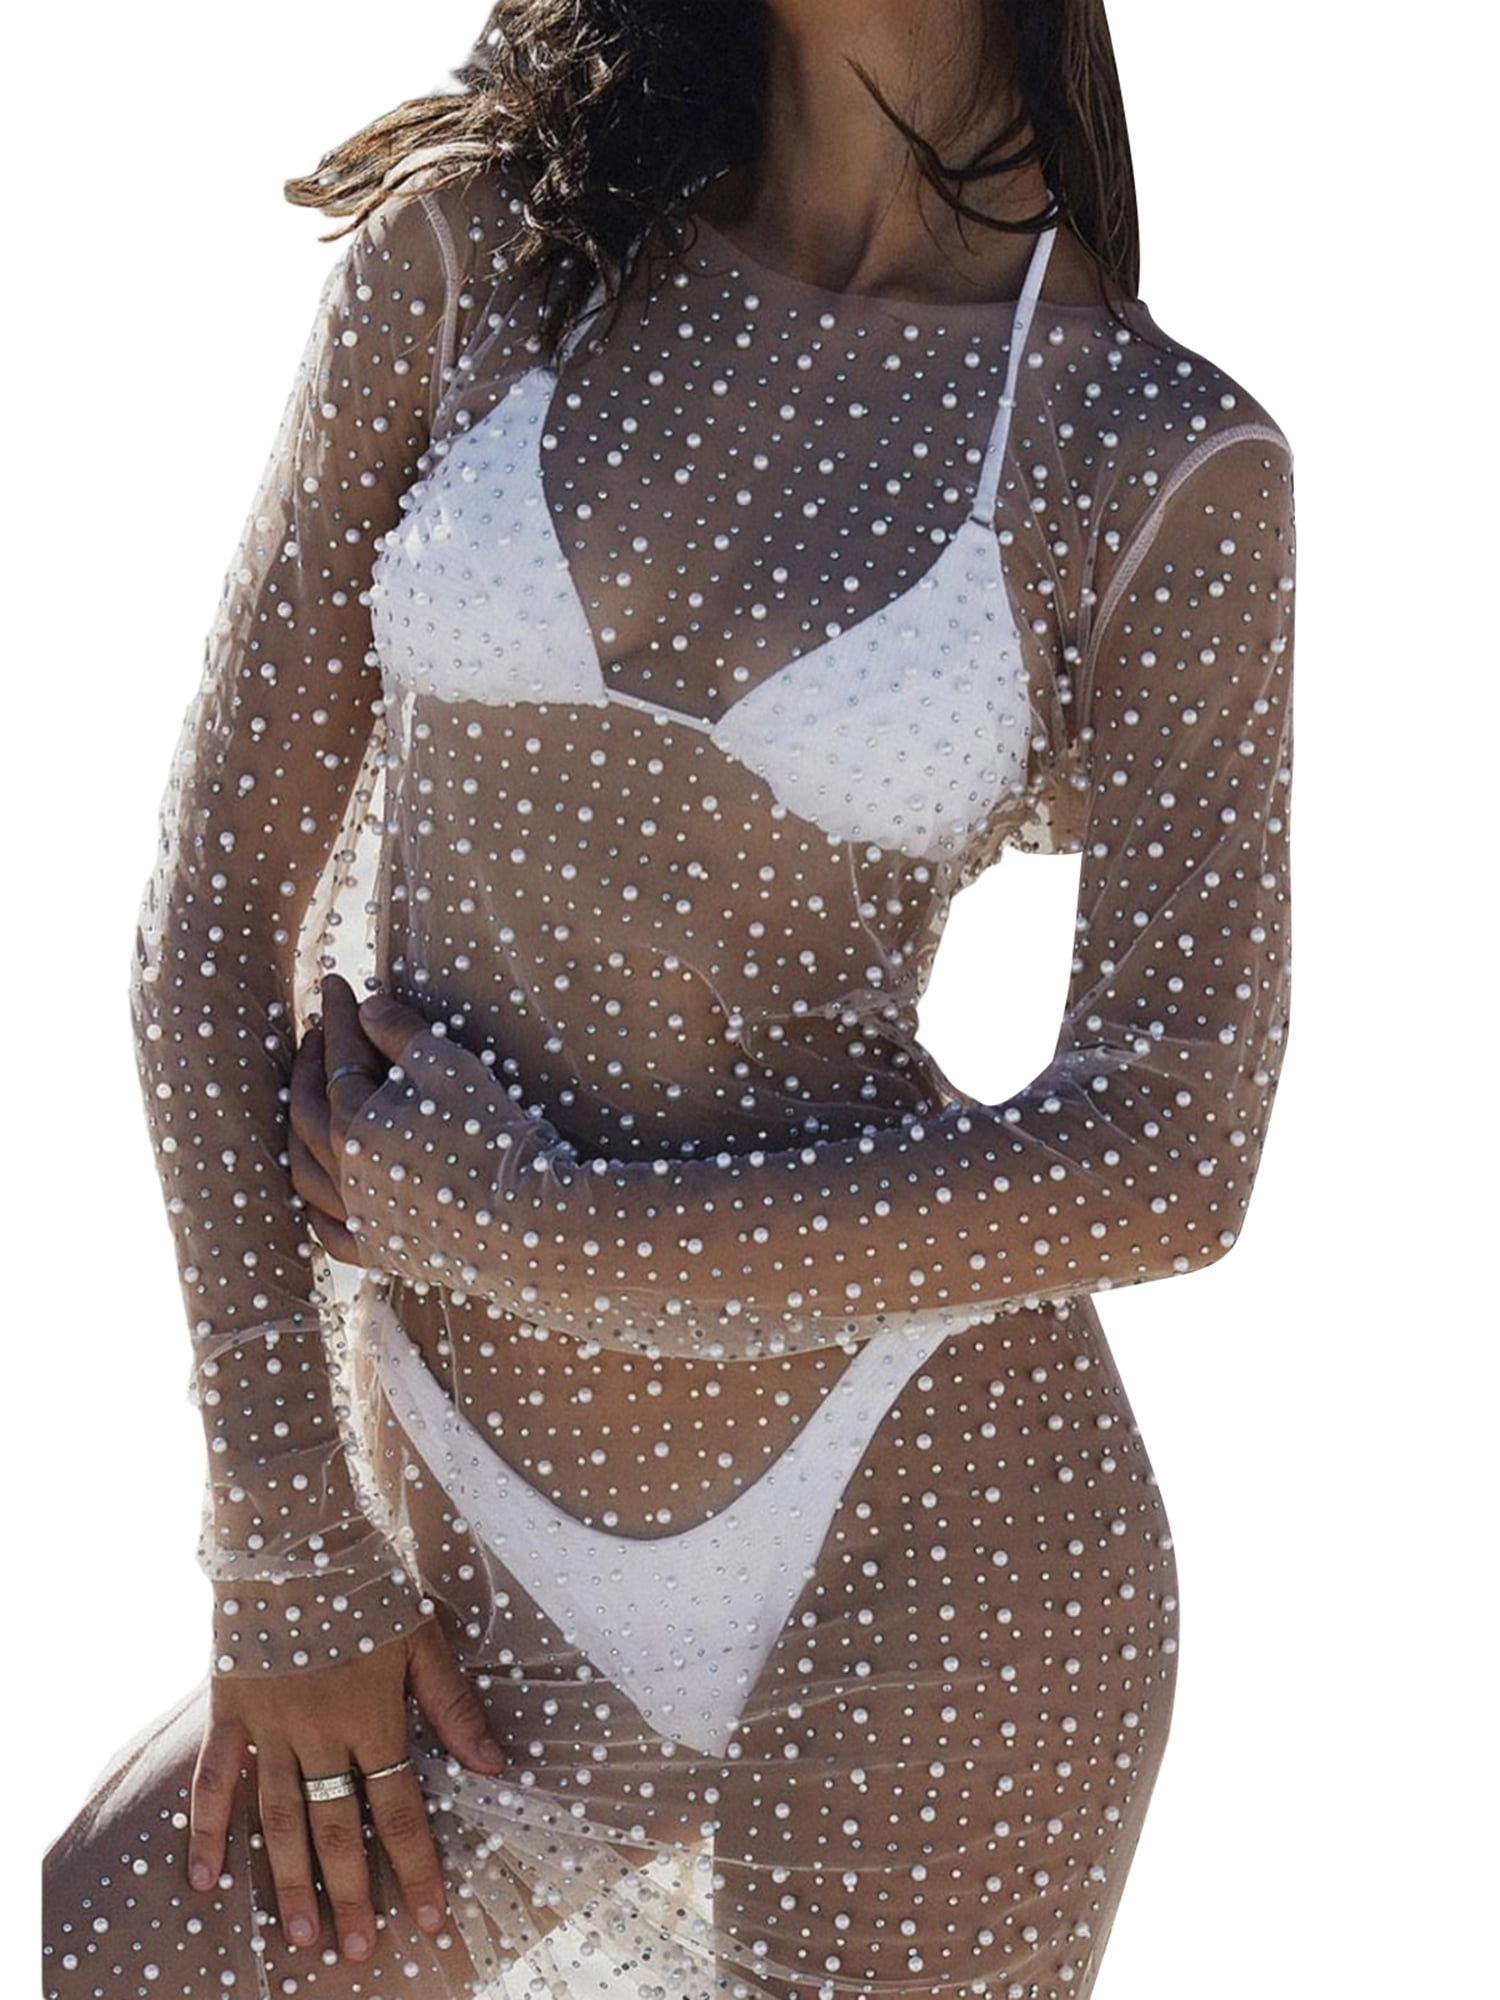 hirigin Transparent Mesh Body Suit Sexy Tops for Women High Cut